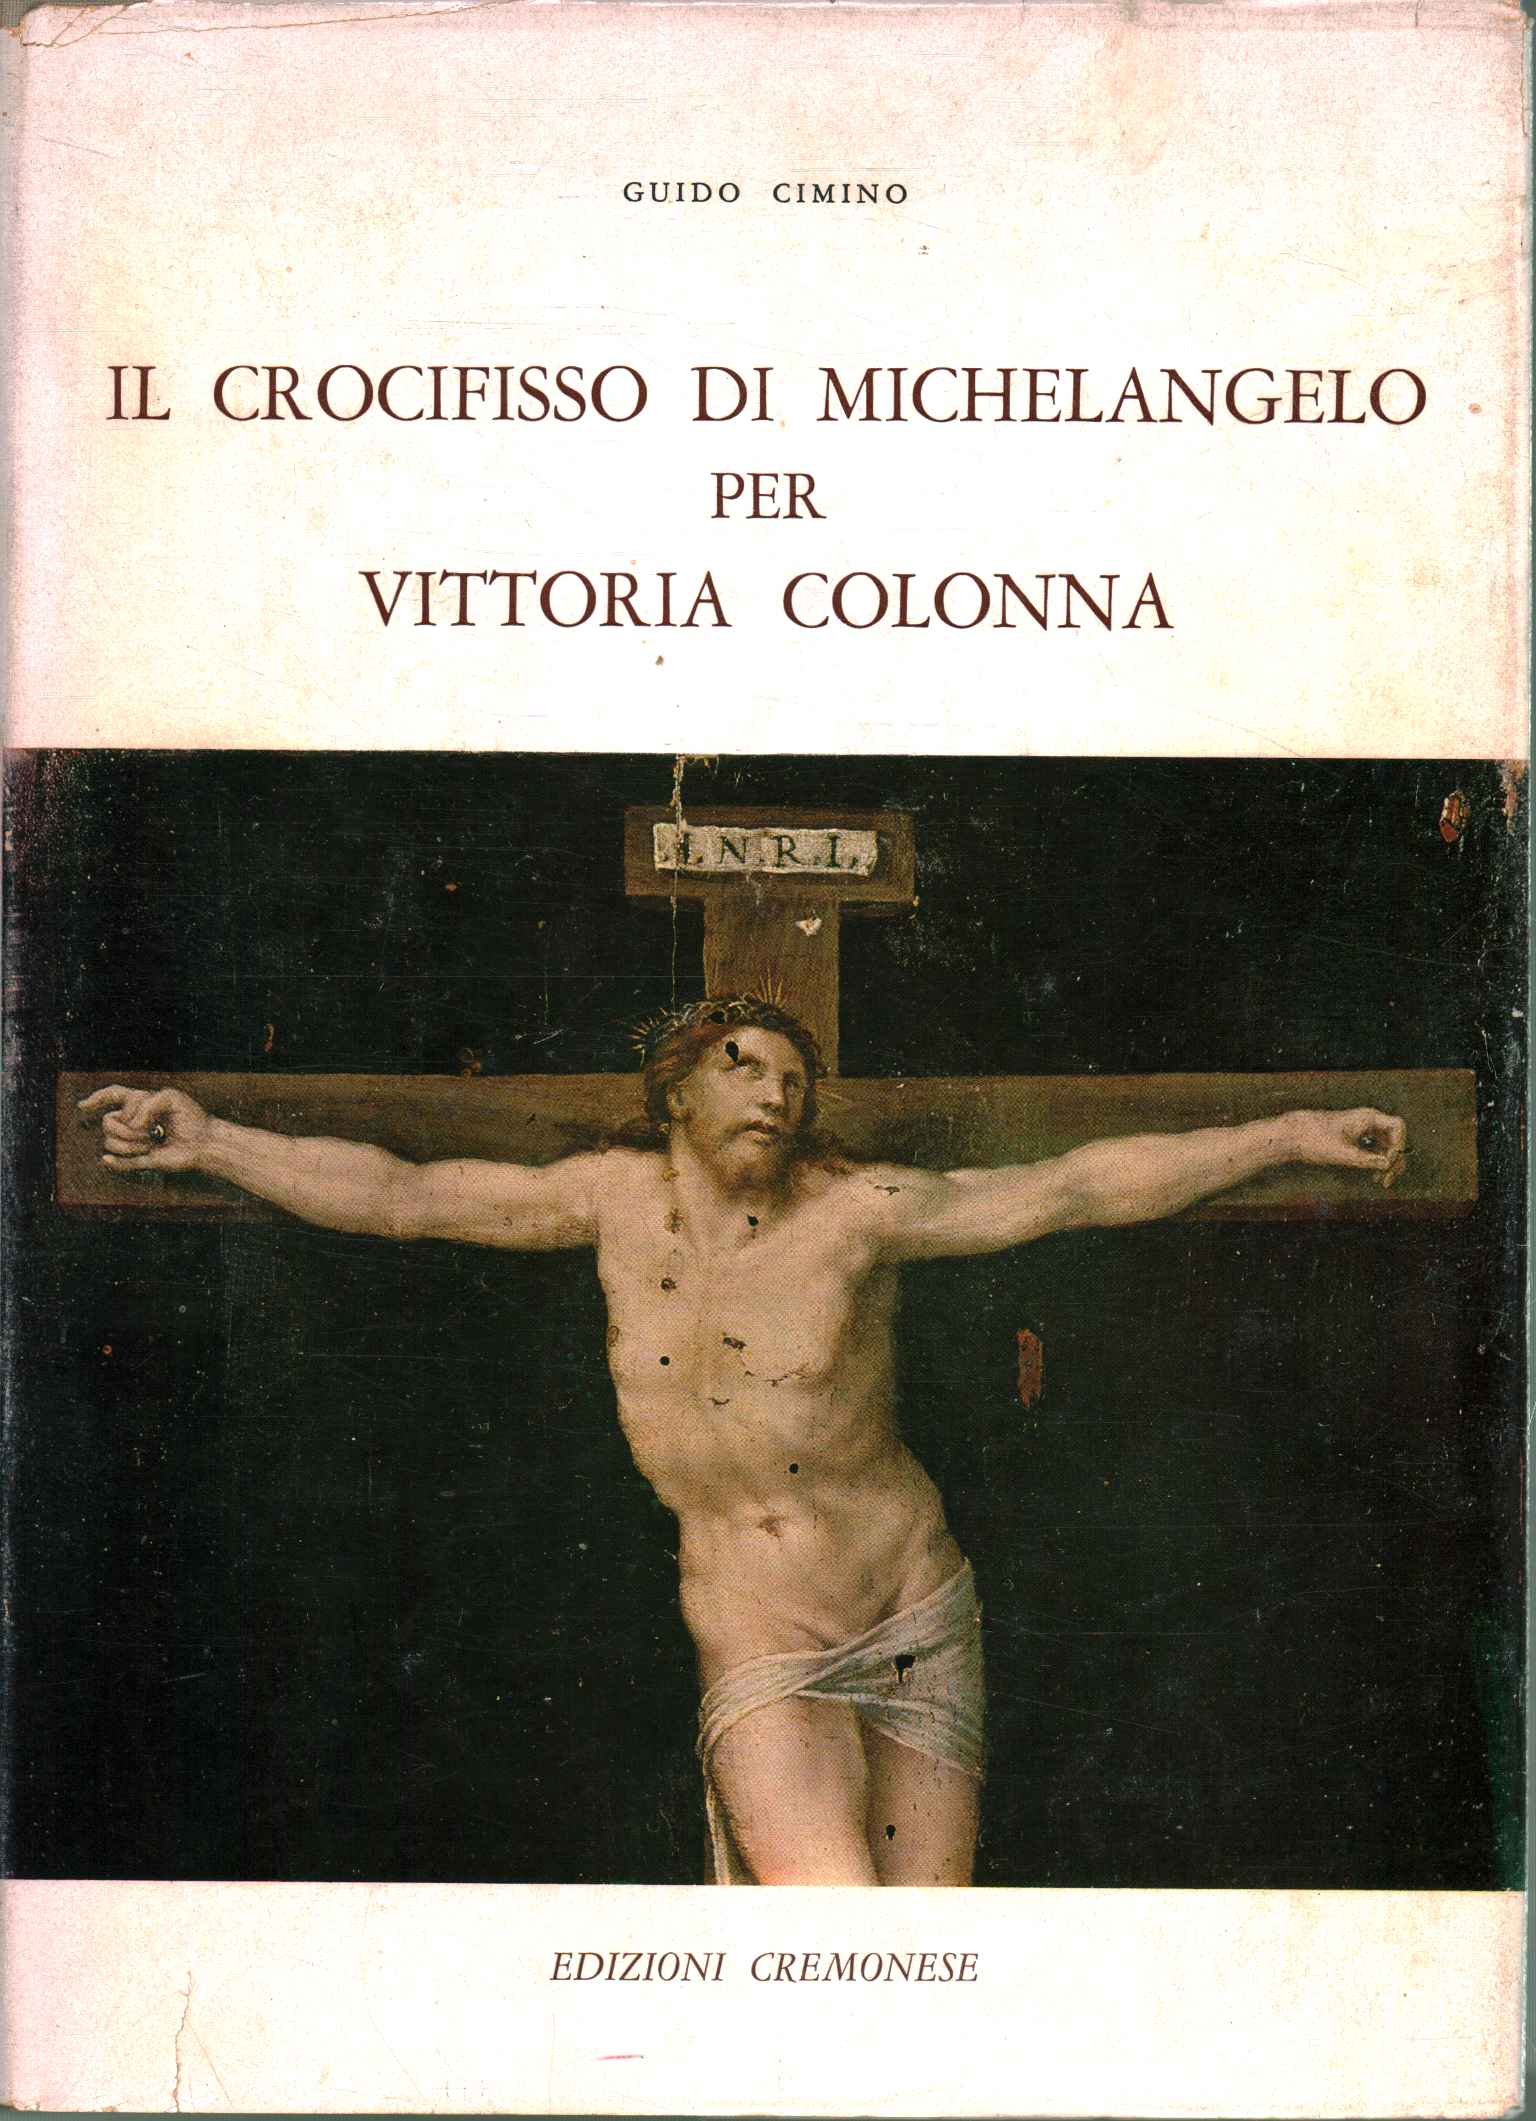 Michelangelo's crucifix for Vittor